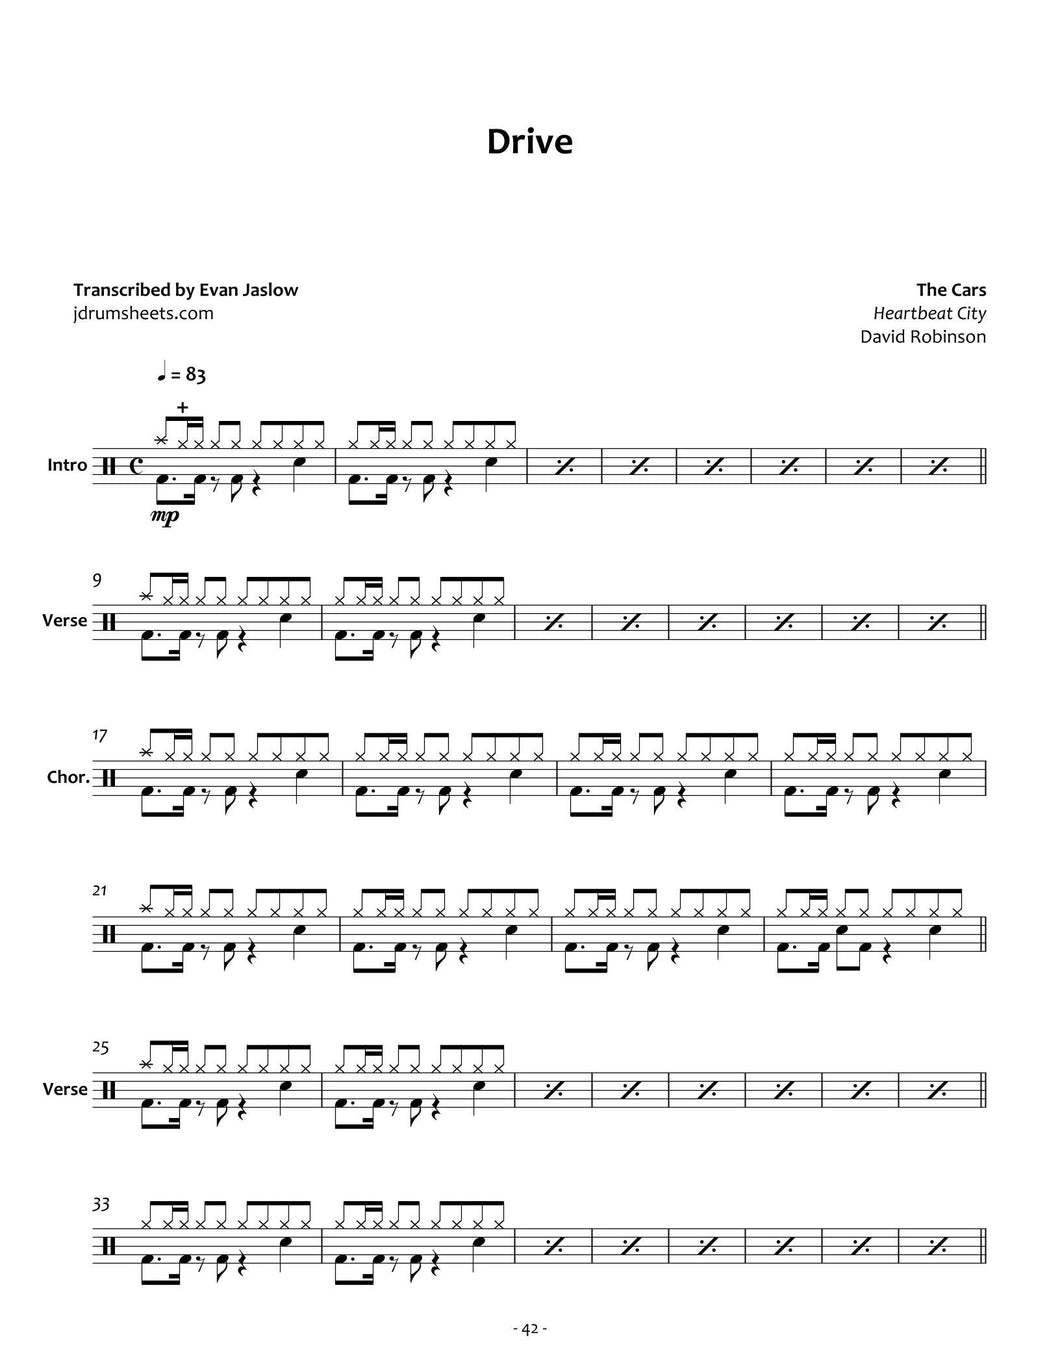 Drive - The Cars - Full Drum Transcription / Drum Sheet Music - Jaslow Drum Sheets